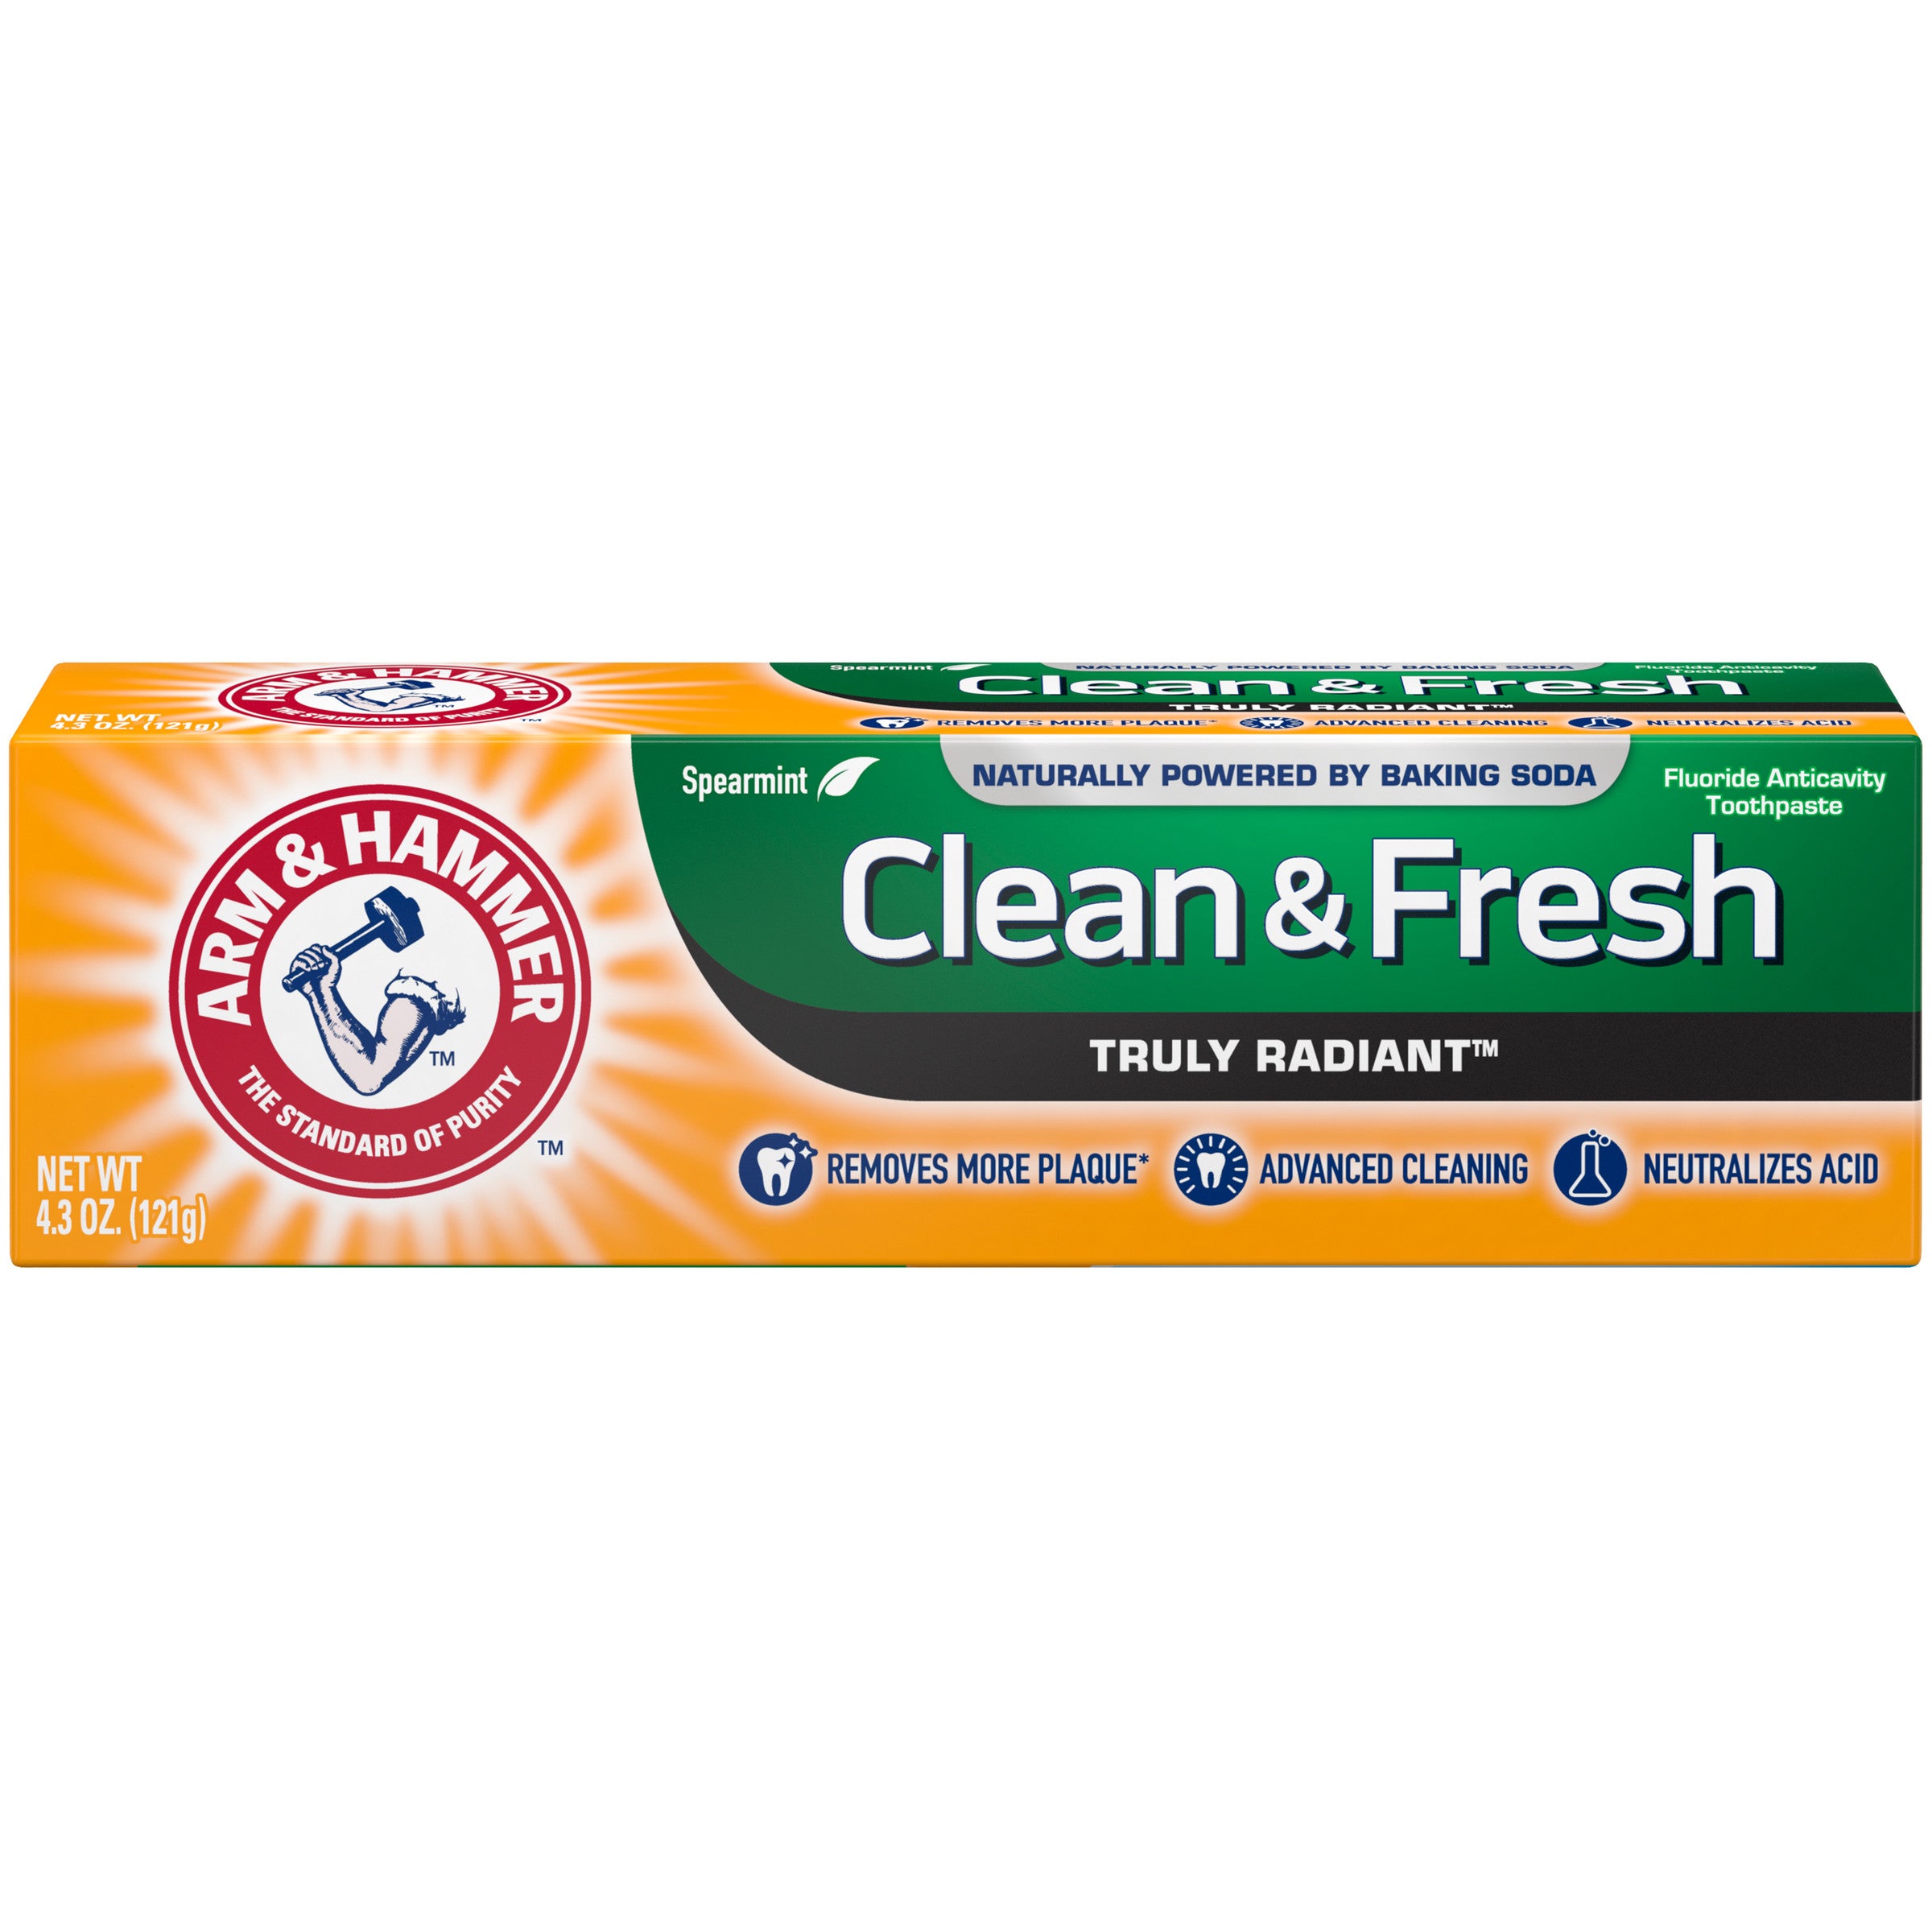 AHDC Clean & Fresh Truly Radiant Toothpaste - 4.3oz/12pk